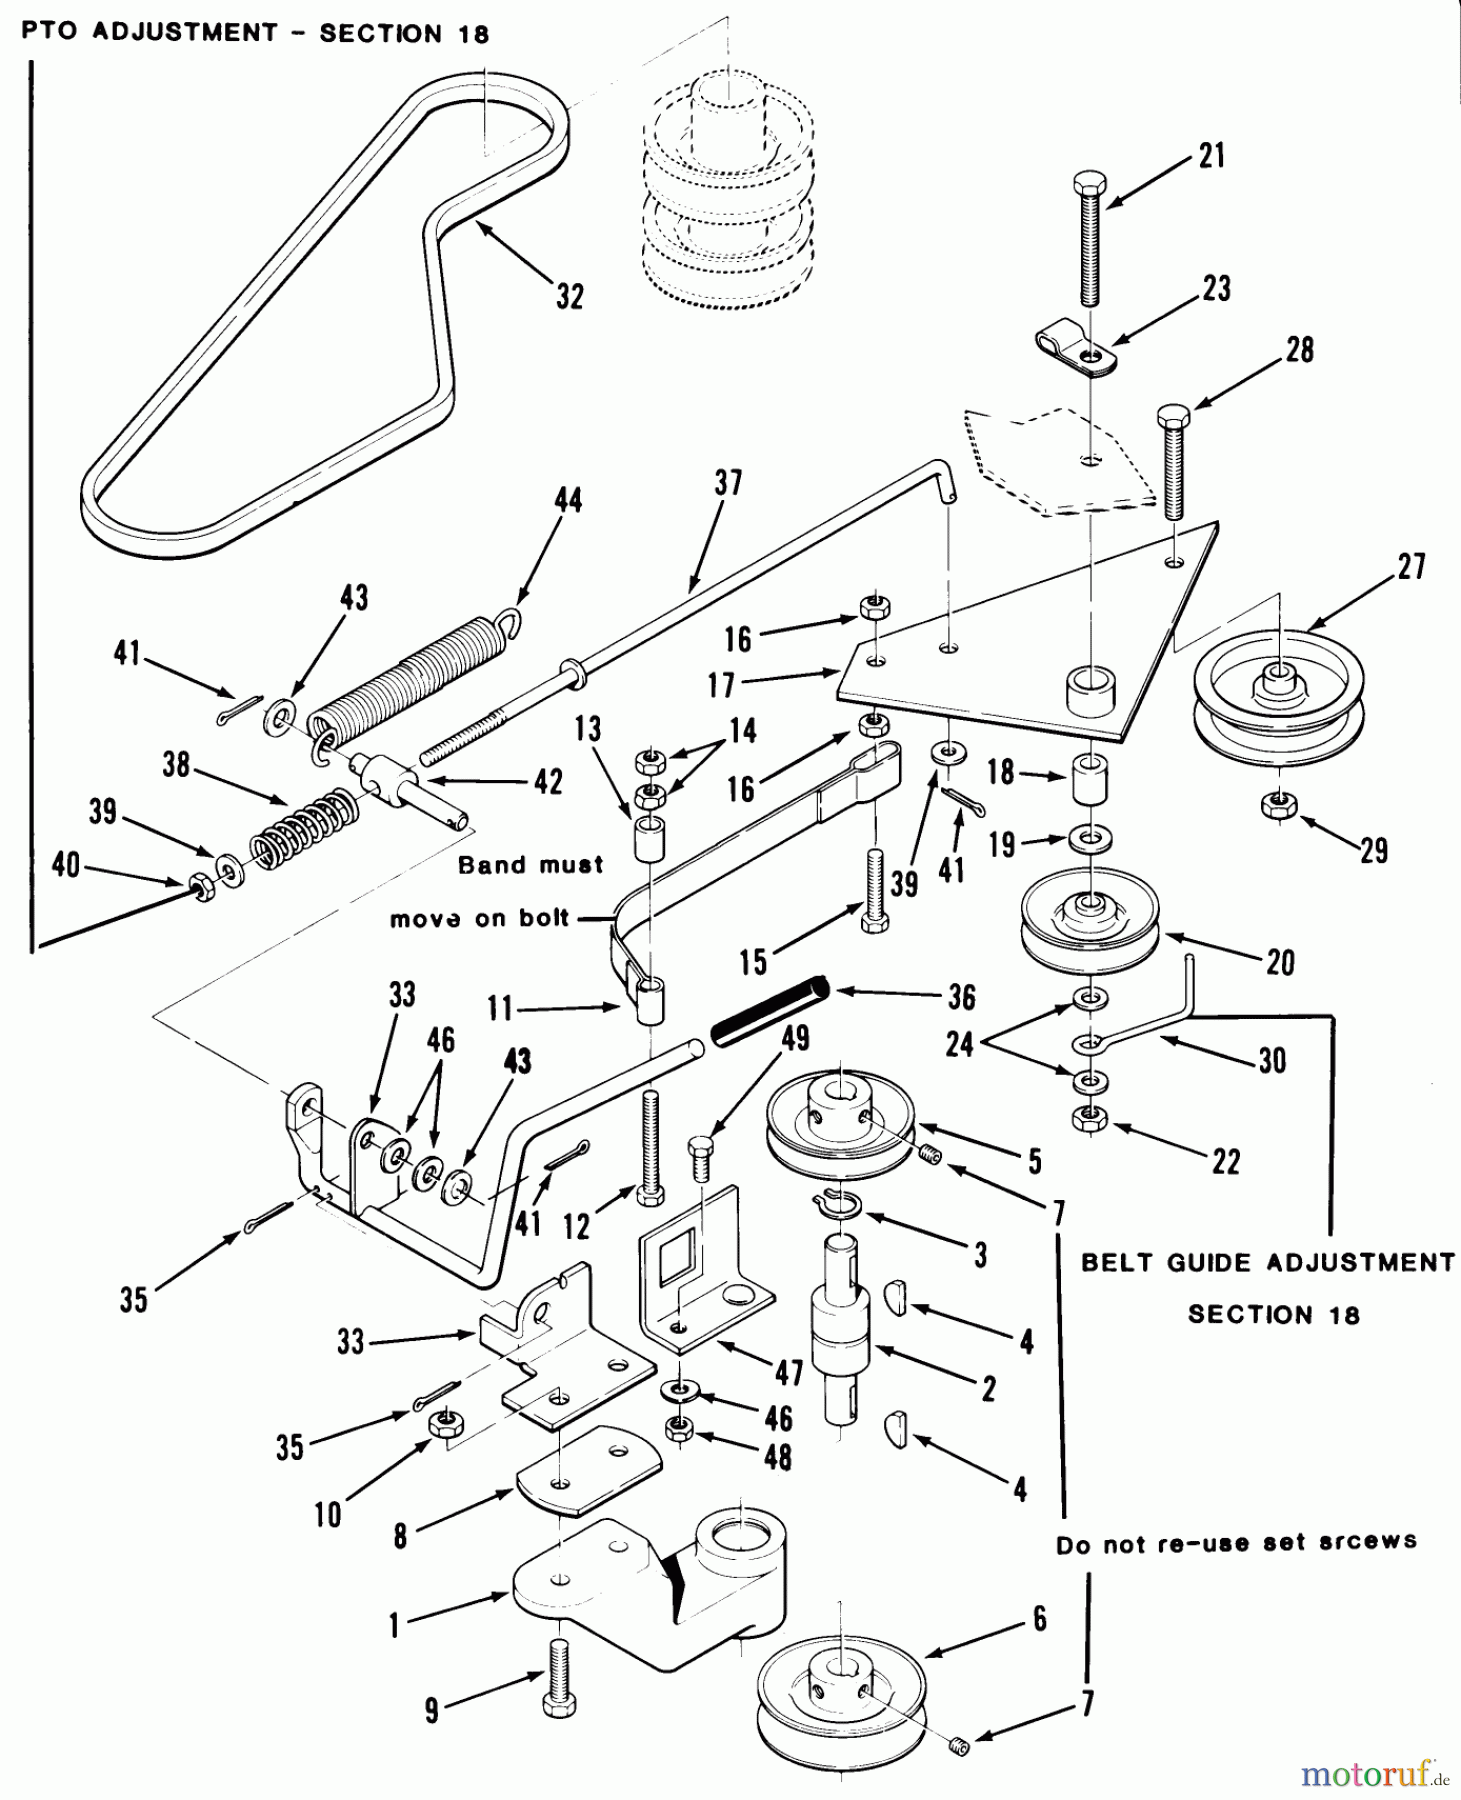  Toro Neu Mowers, Rear-Engine Rider 33-11B501 (111-5) - Toro 111-5 Rear Engine Rider, 1985 PTO CLUTCH, PULLEYS, AND CONTROLS